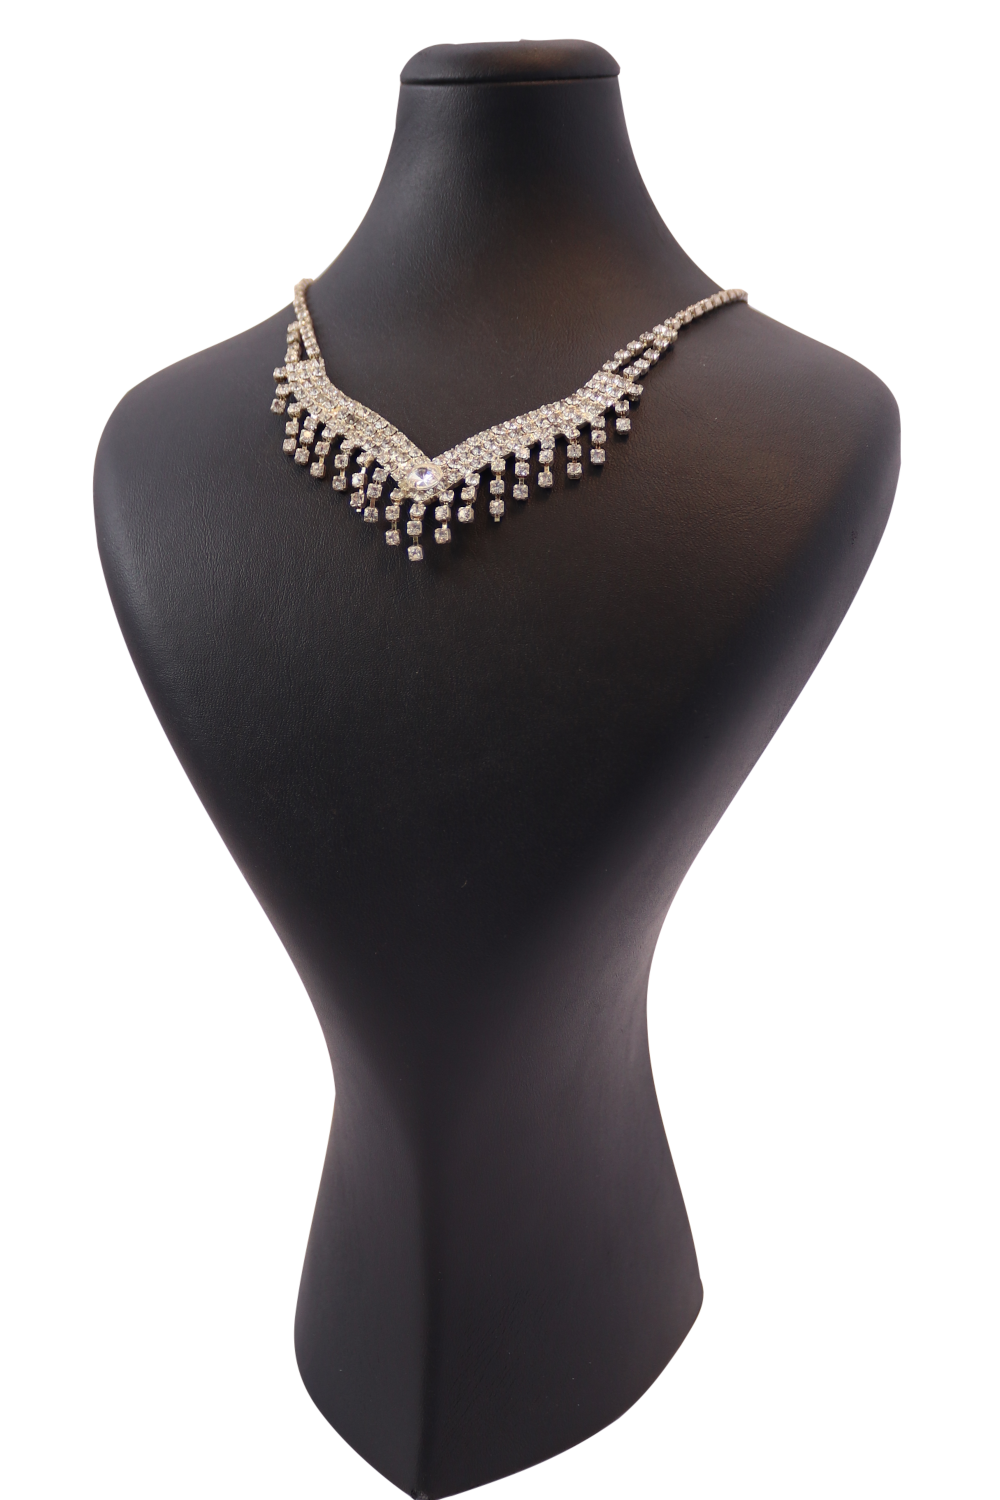 Copenhagen jewelry necklace stand